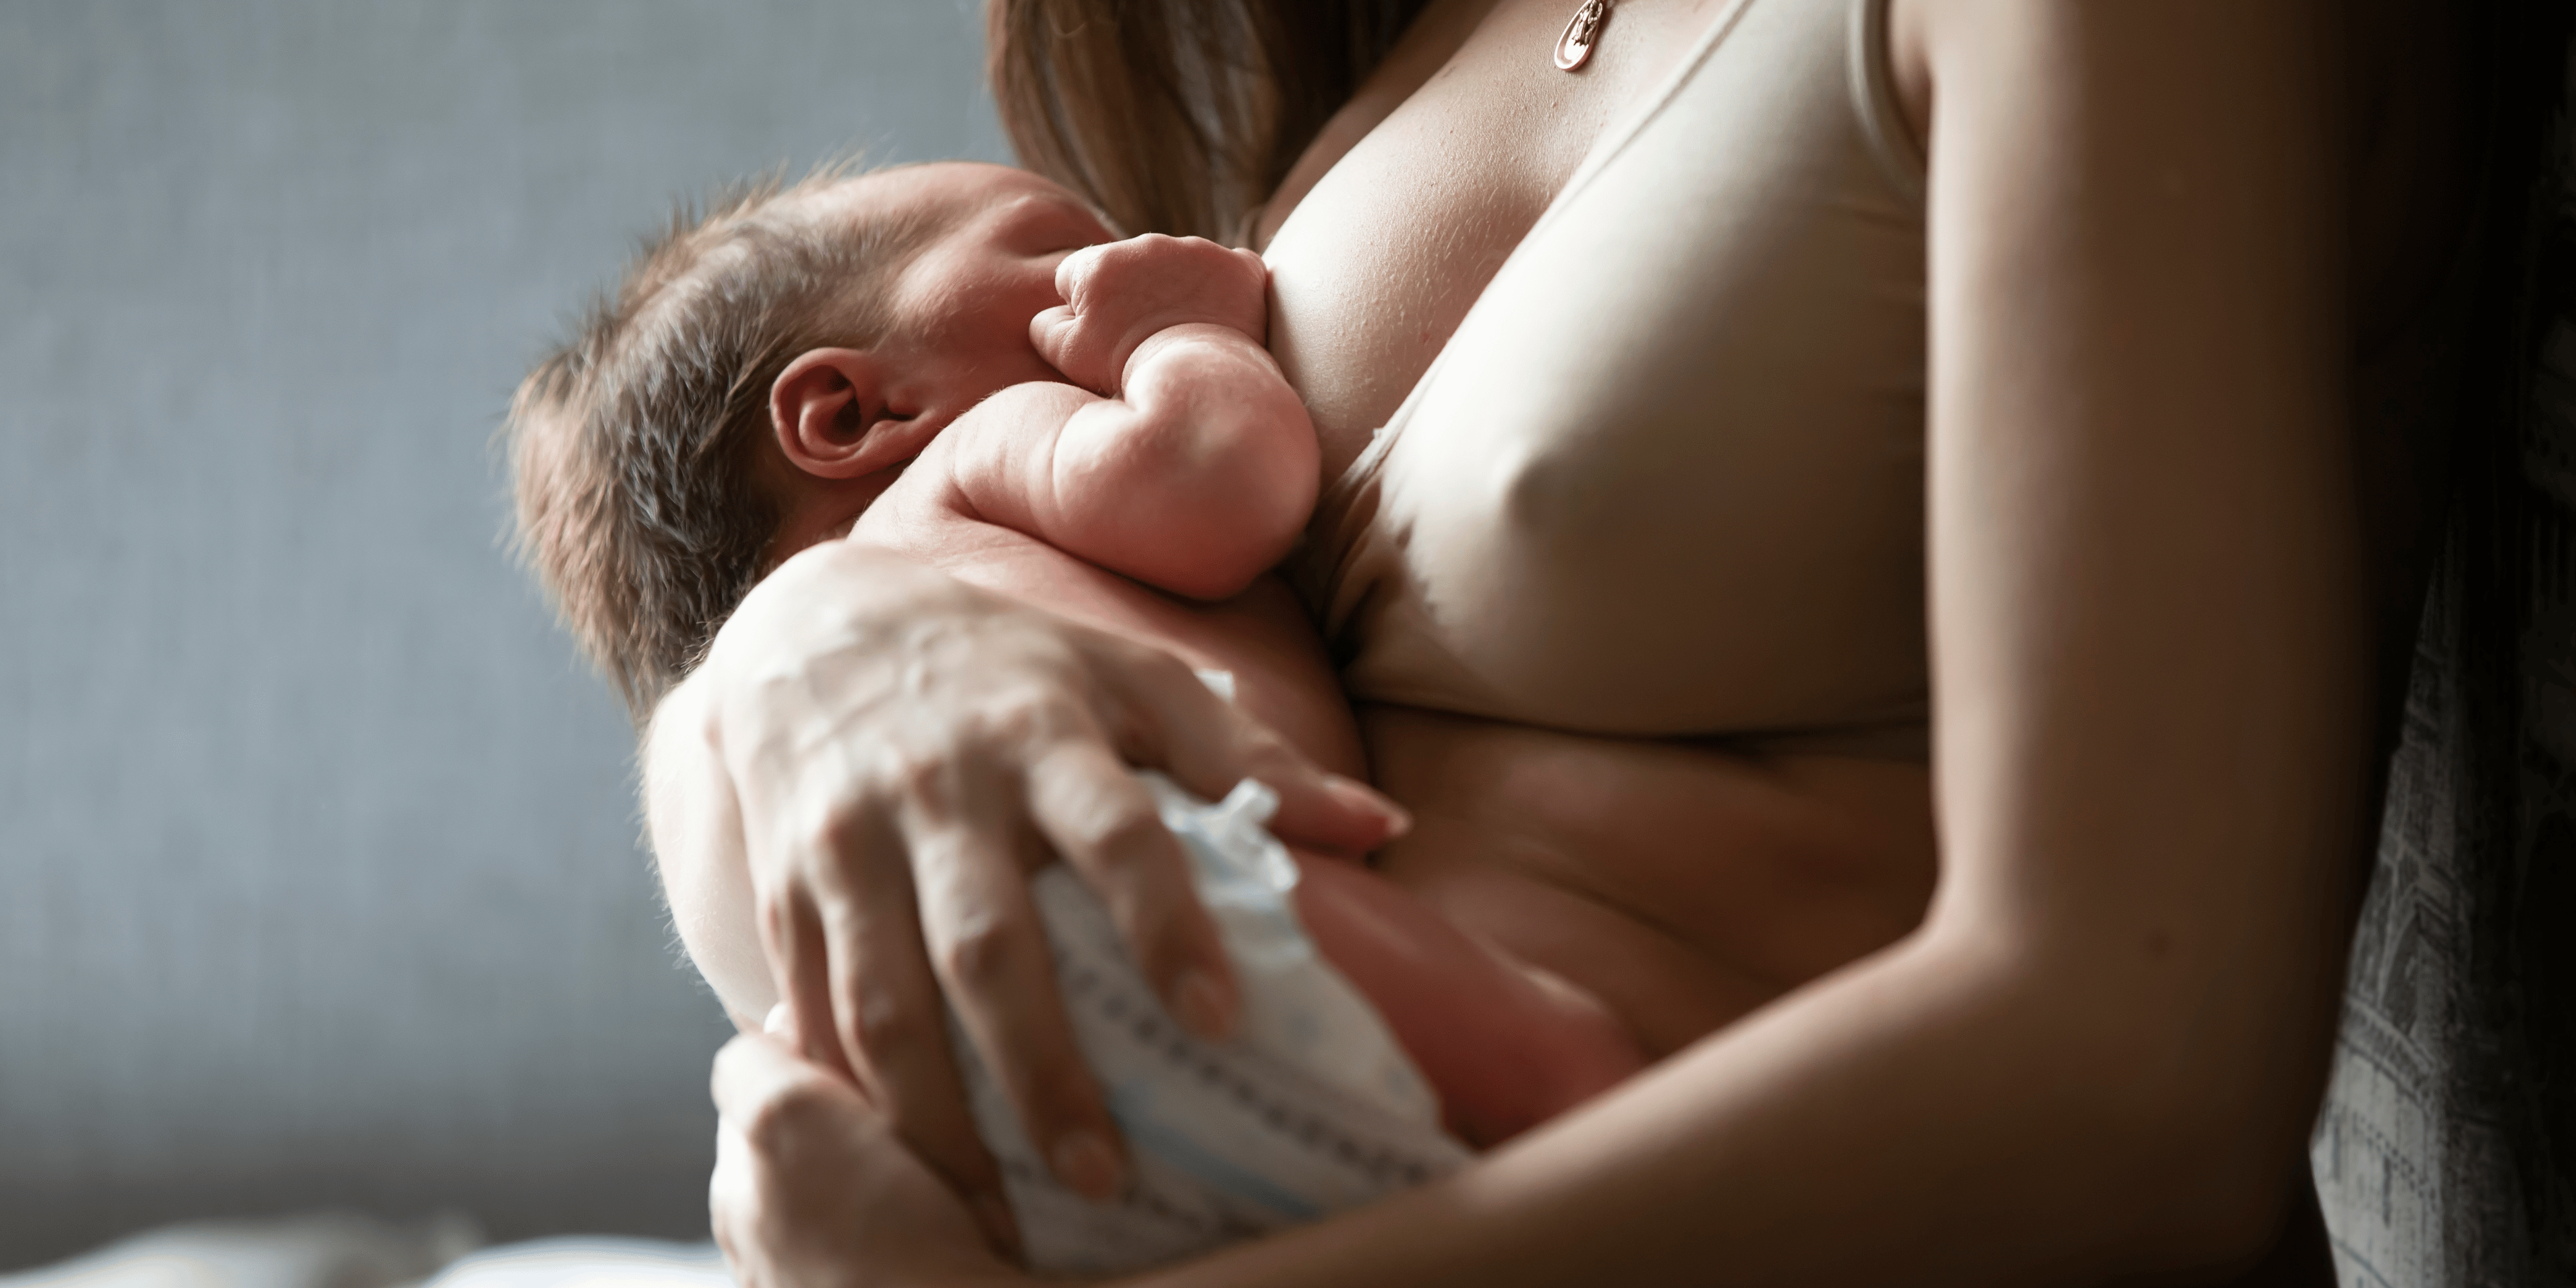 Mother and newborn baby, breastfeeding